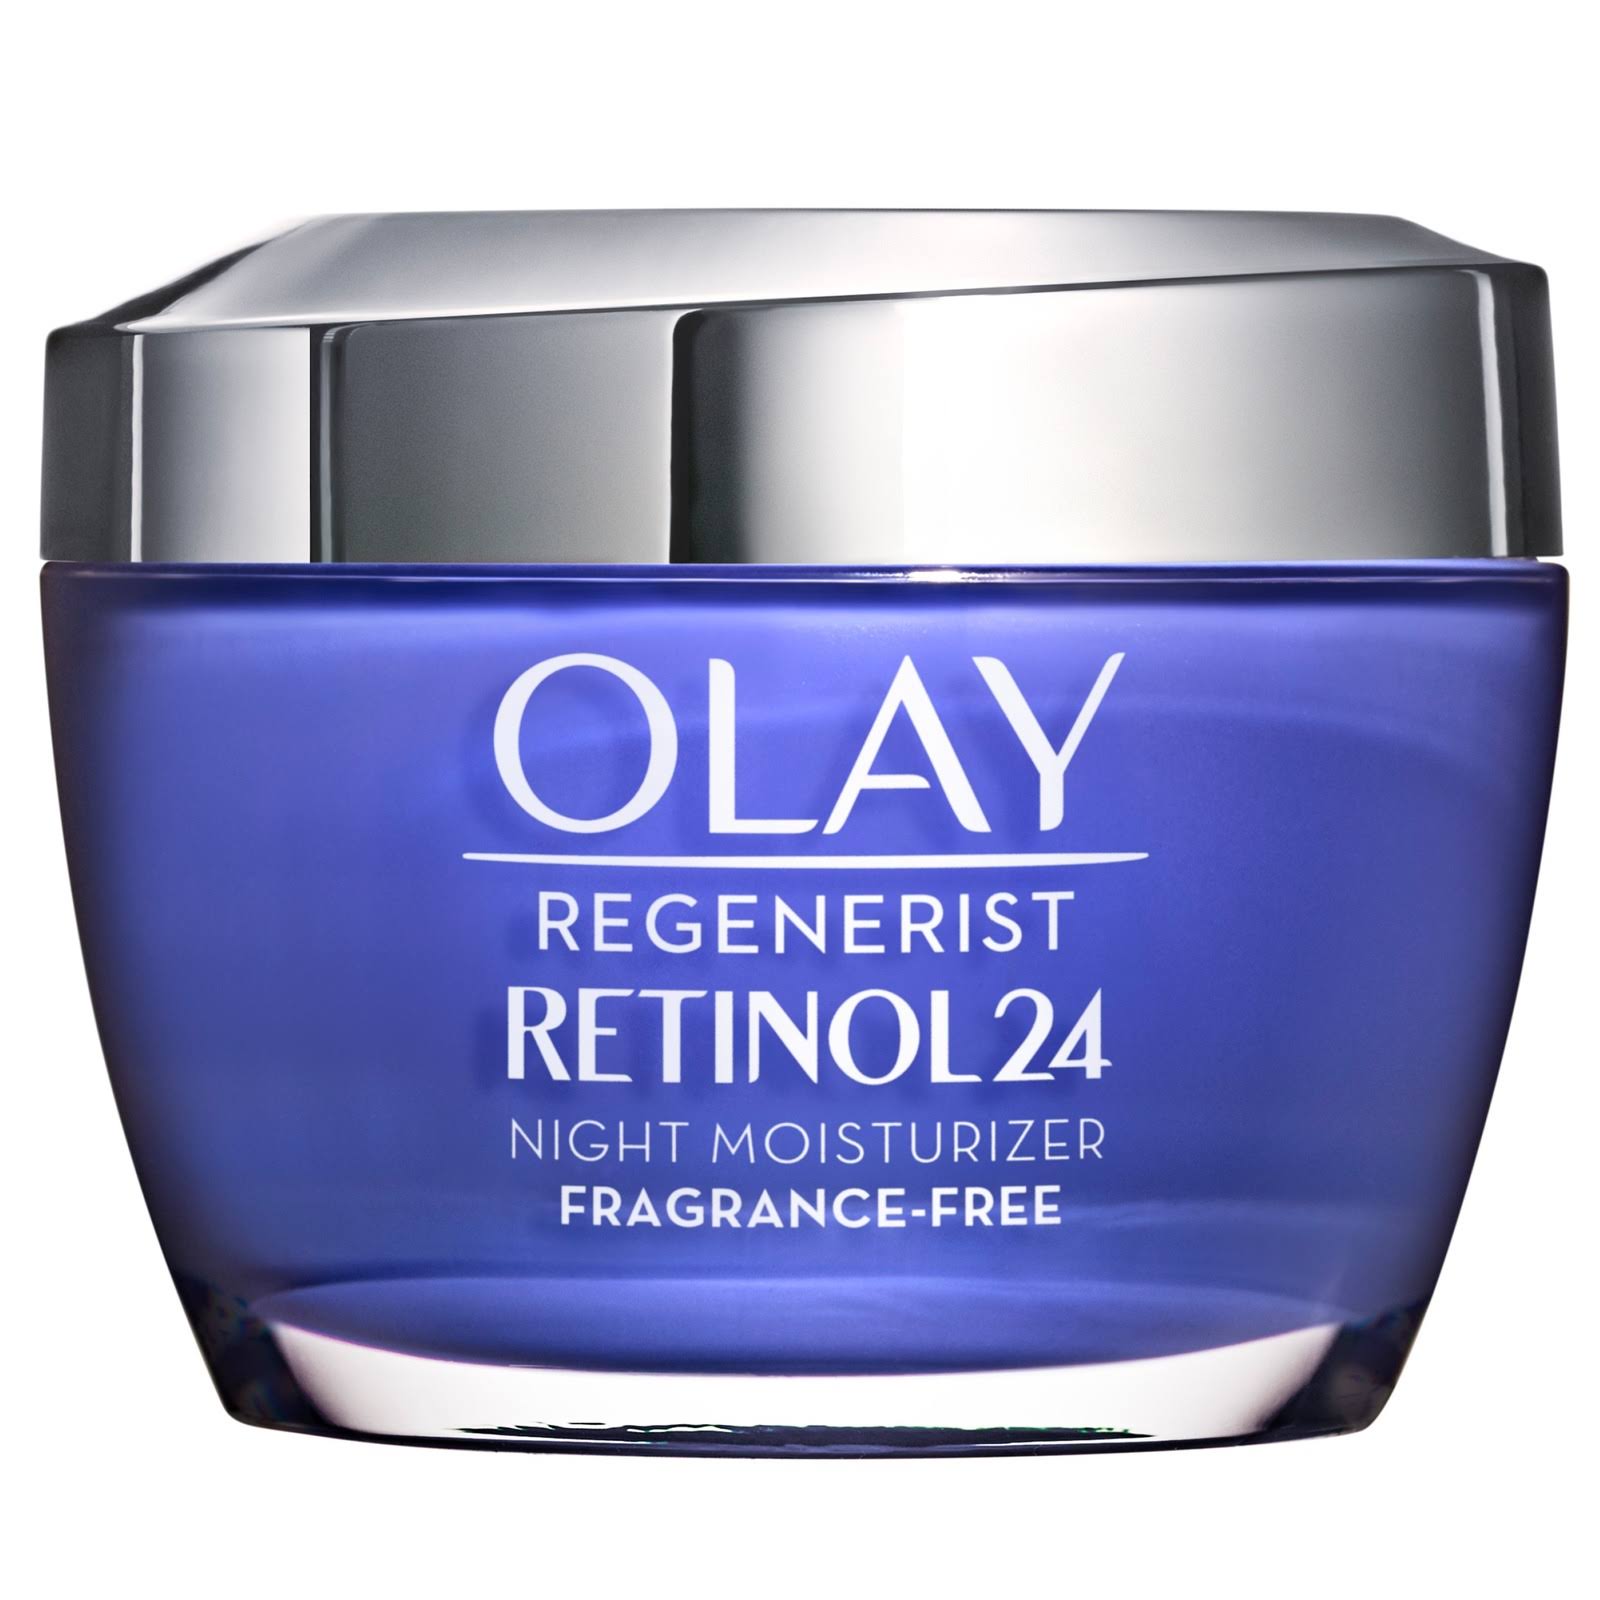 Olay Regenerist Retinol24 Night Moisturizer - Fragrance Free, 1.7oz